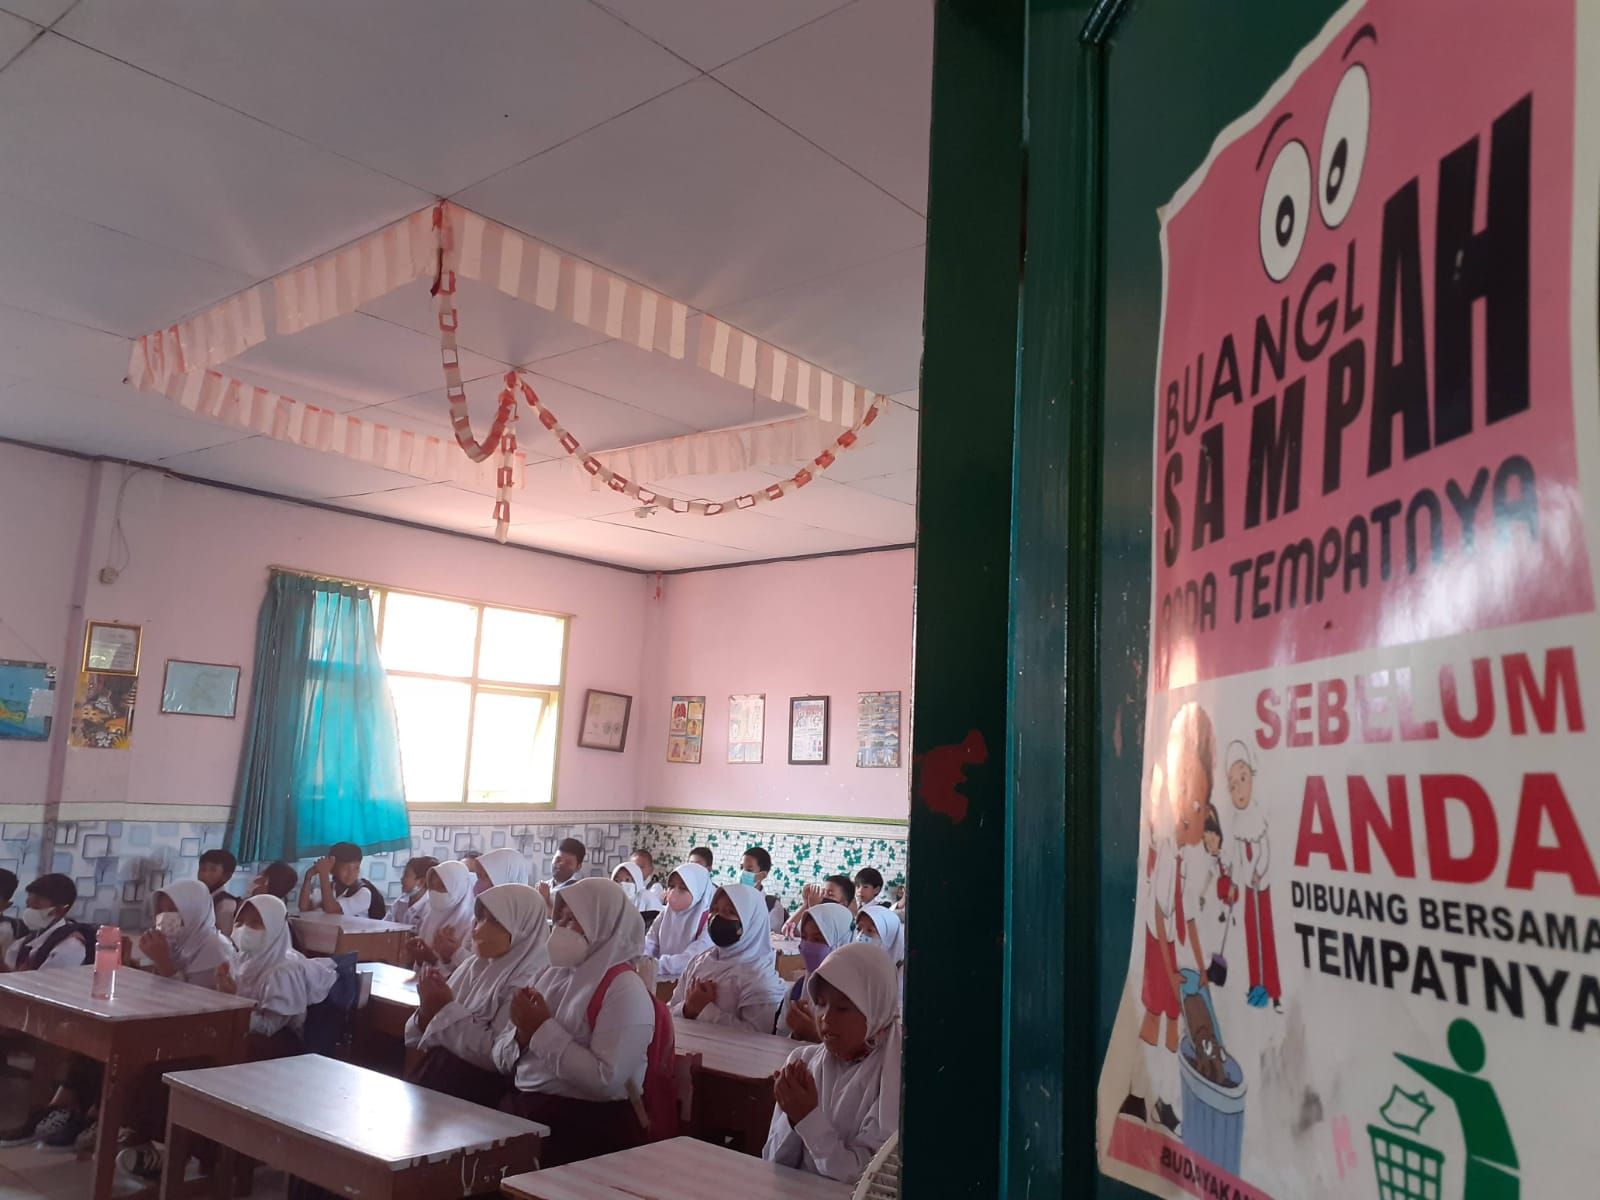 Suasana murid SD Negeri Bhayangkari Kota Serang saat kegiatan belajar mengajar.